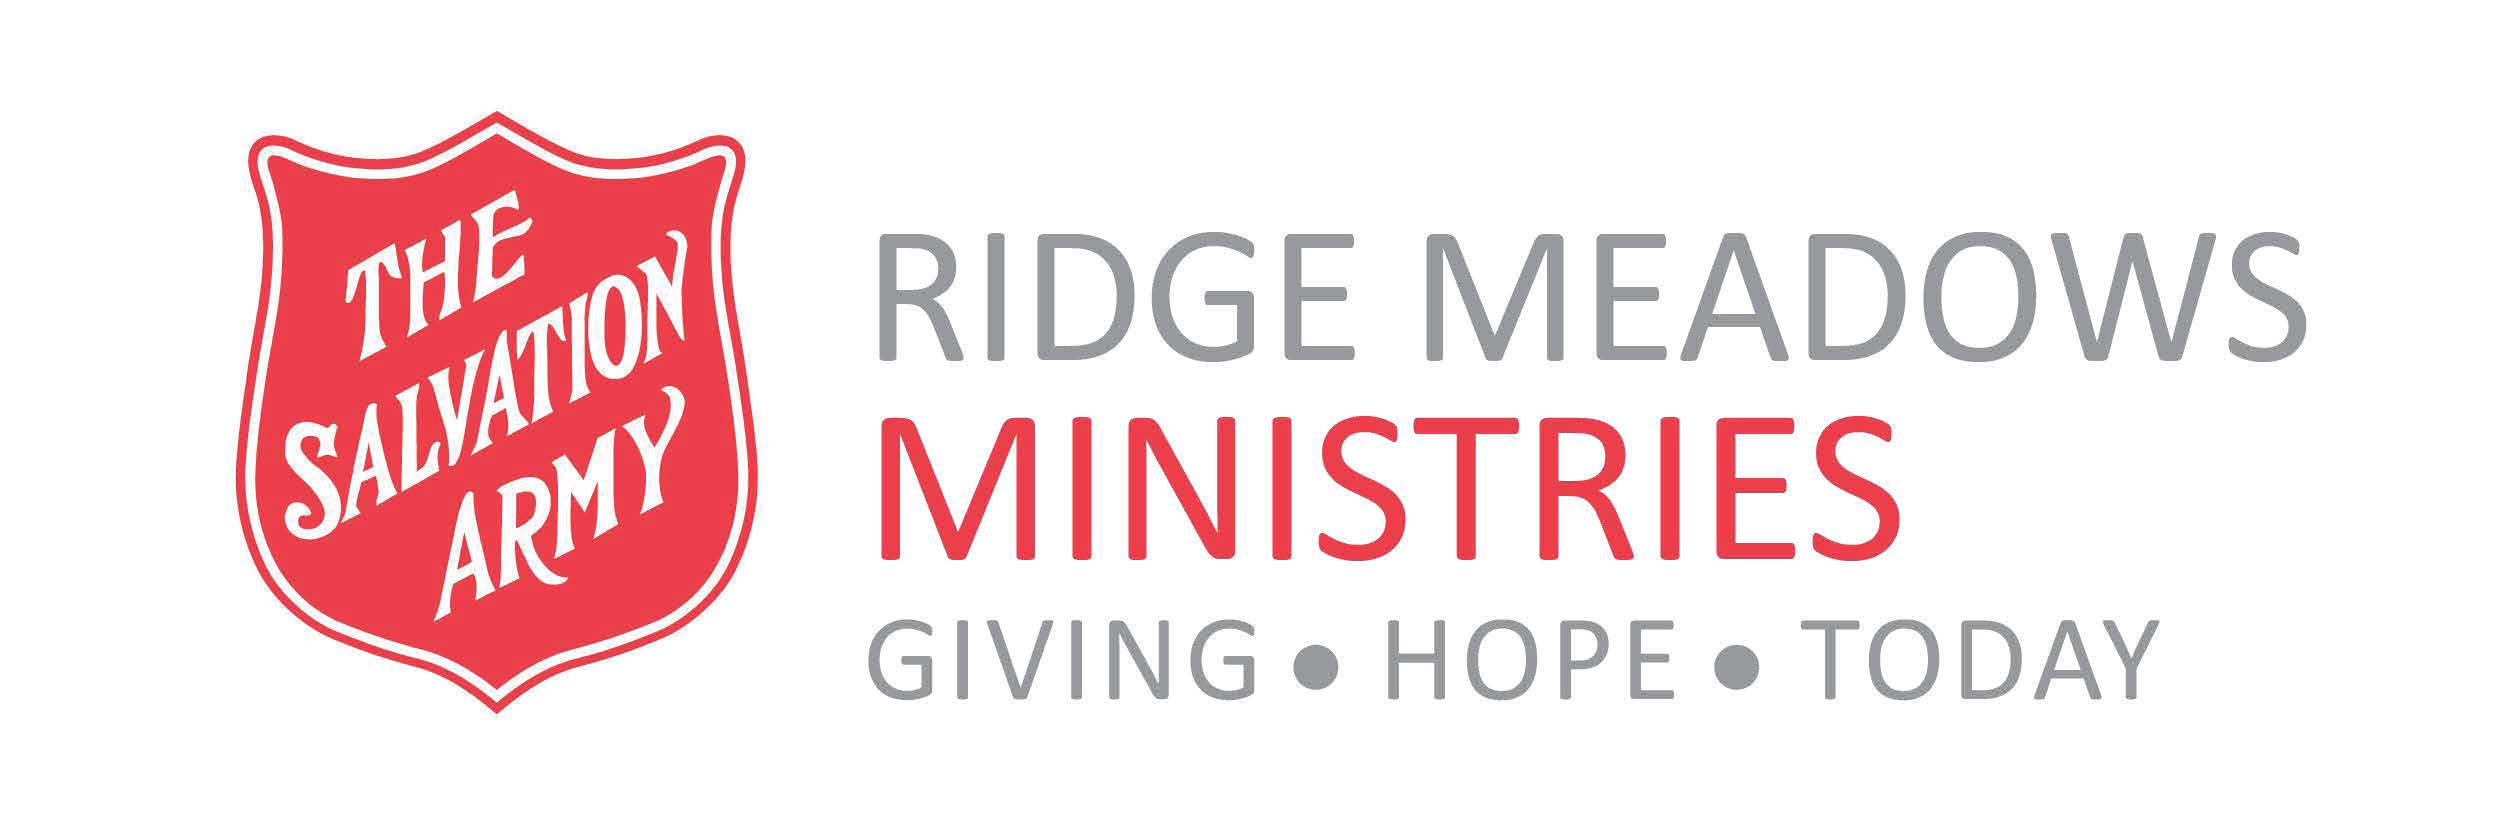 The Salvation Army Ridge Meadows Ministries logo